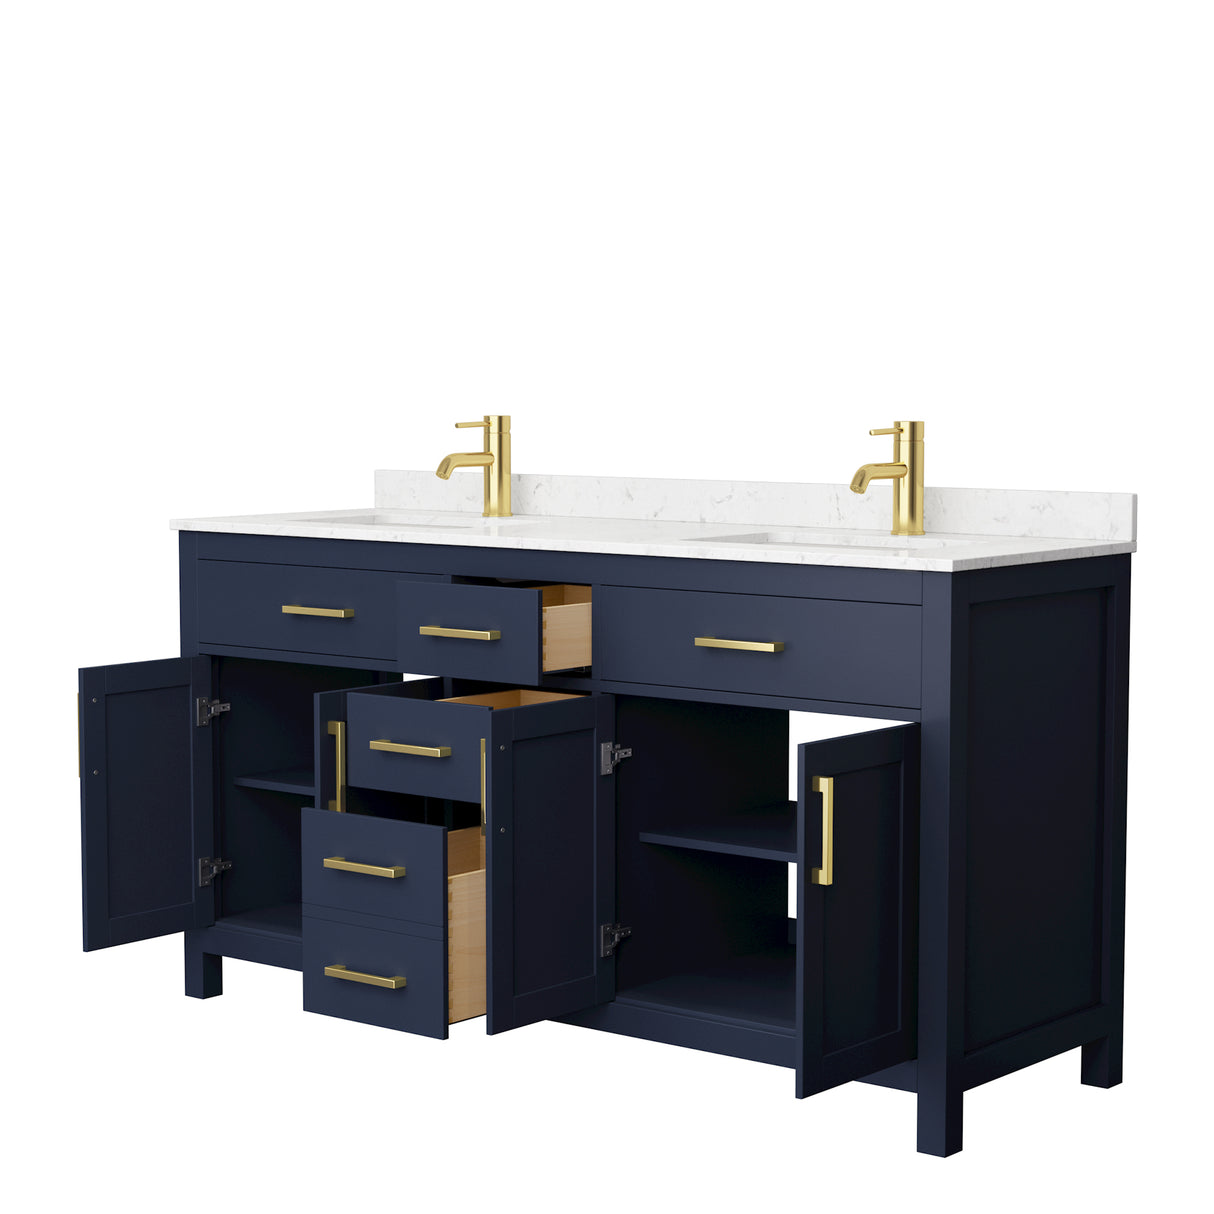 Beckett 66 Inch Double Bathroom Vanity in Dark Blue Carrara Cultured Marble Countertop Undermount Square Sinks No Mirror